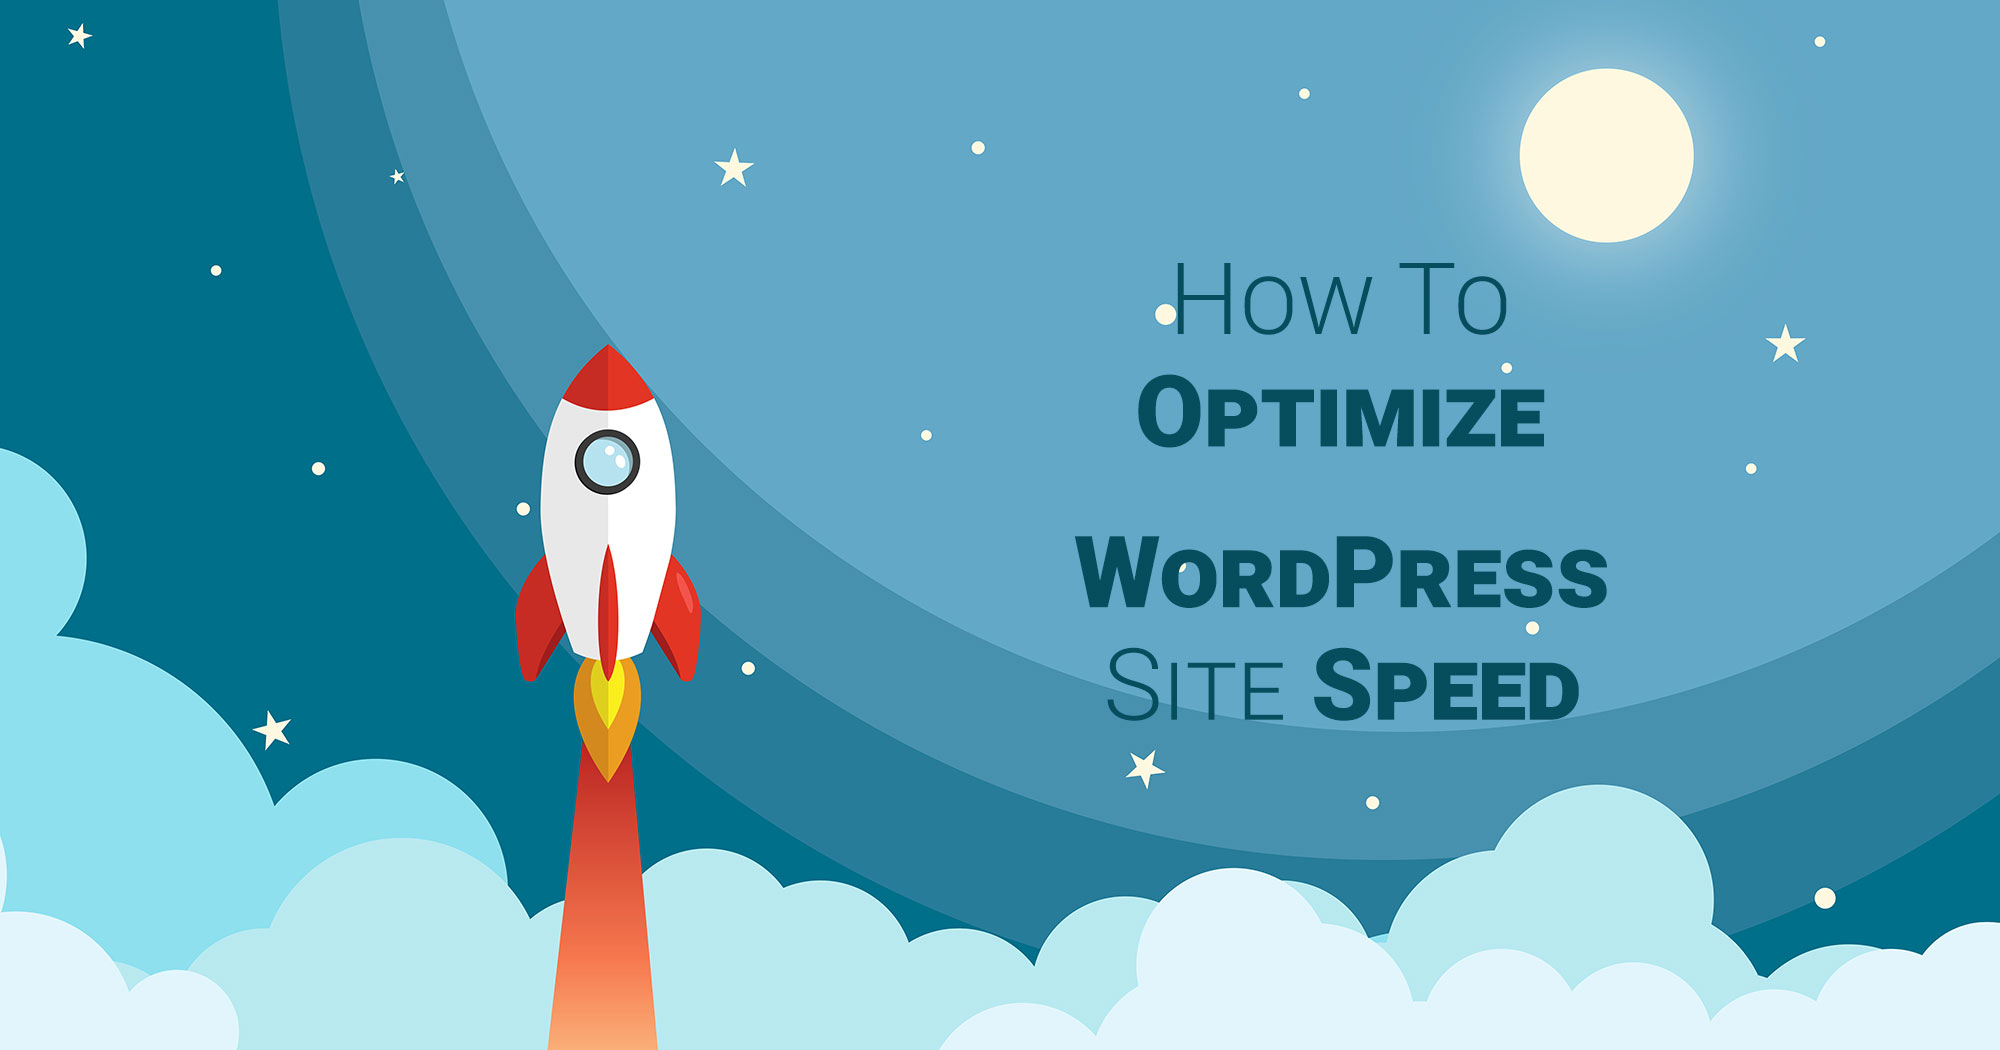 Optimize WordPress Site Speed